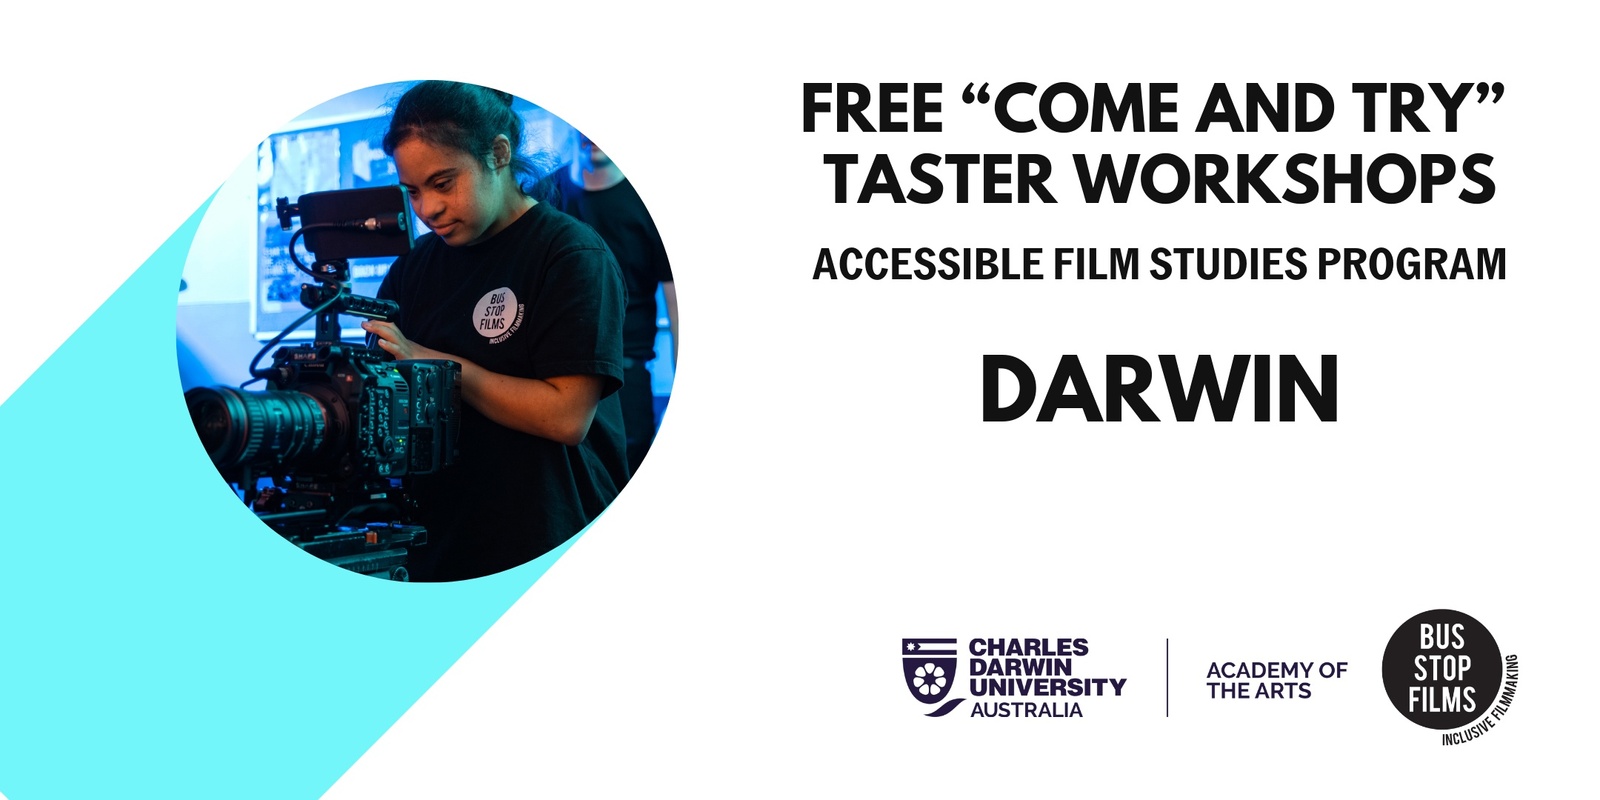 Banner image for Darwin workshop 1 Accessible Film Studies Program - Free “Come and Try” Taster Workshop